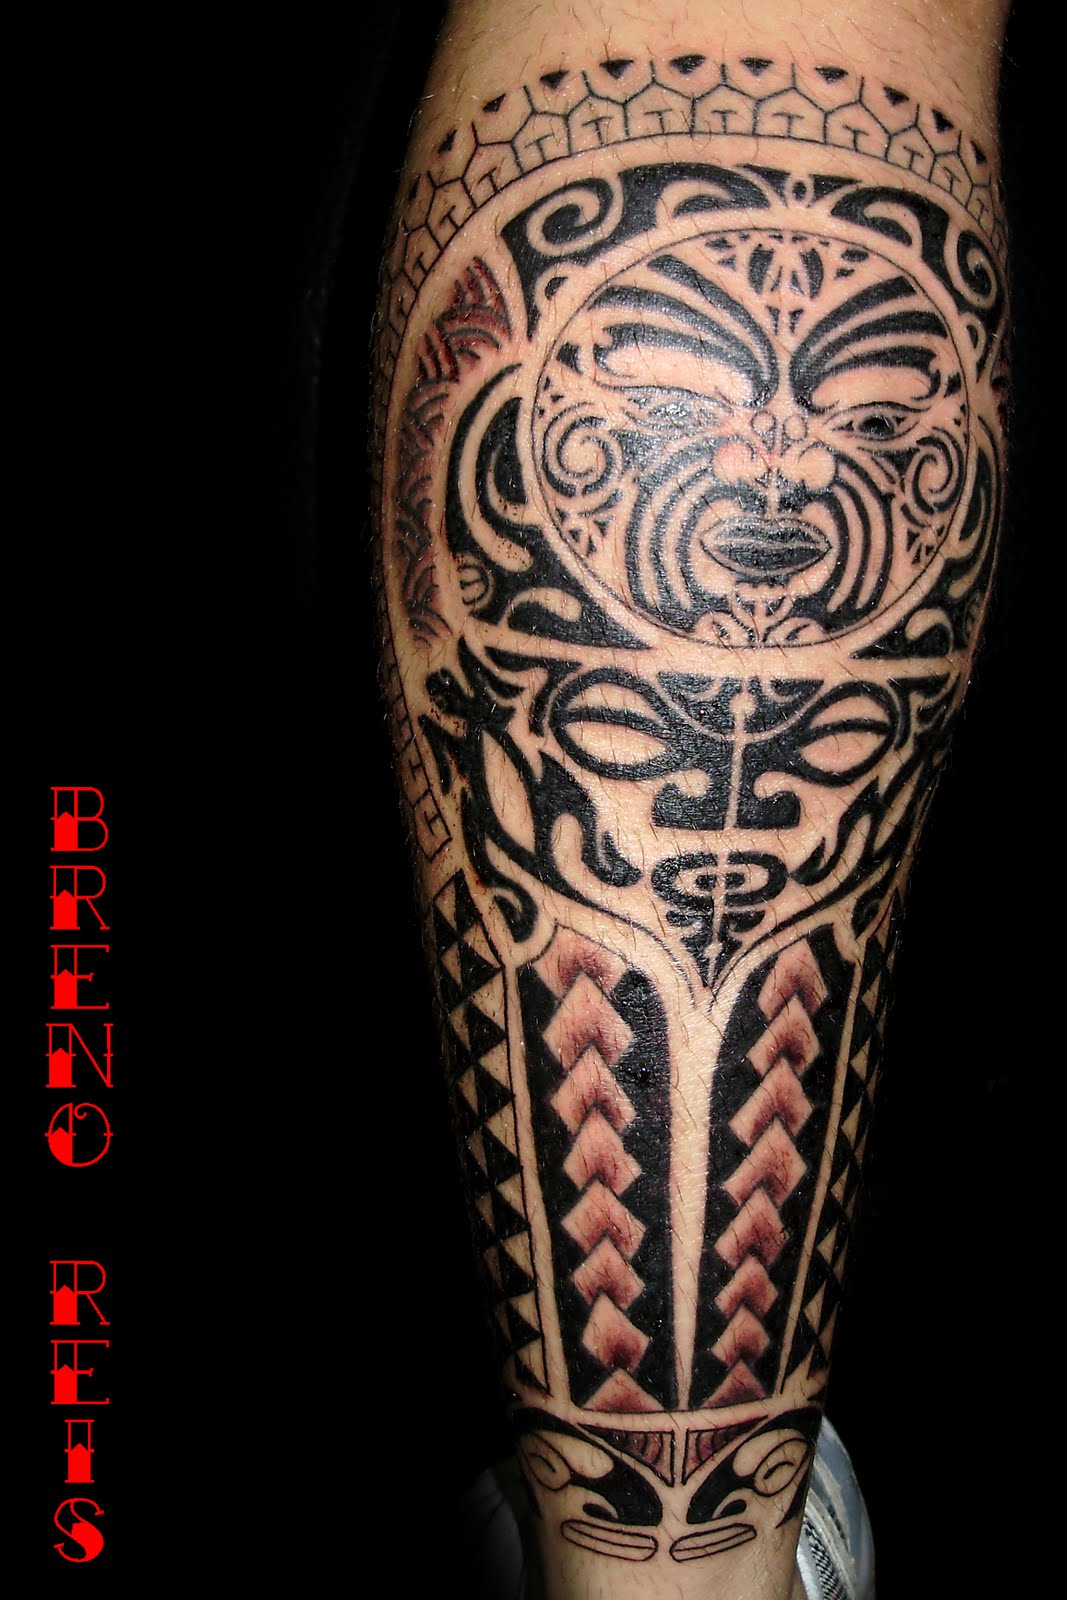 http://4.bp.blogspot.com/_lT9snefCZFw/TIM3WjpwwPI/AAAAAAAAALg/aQl05GgrY-o/s1600/maori+perna.jpg